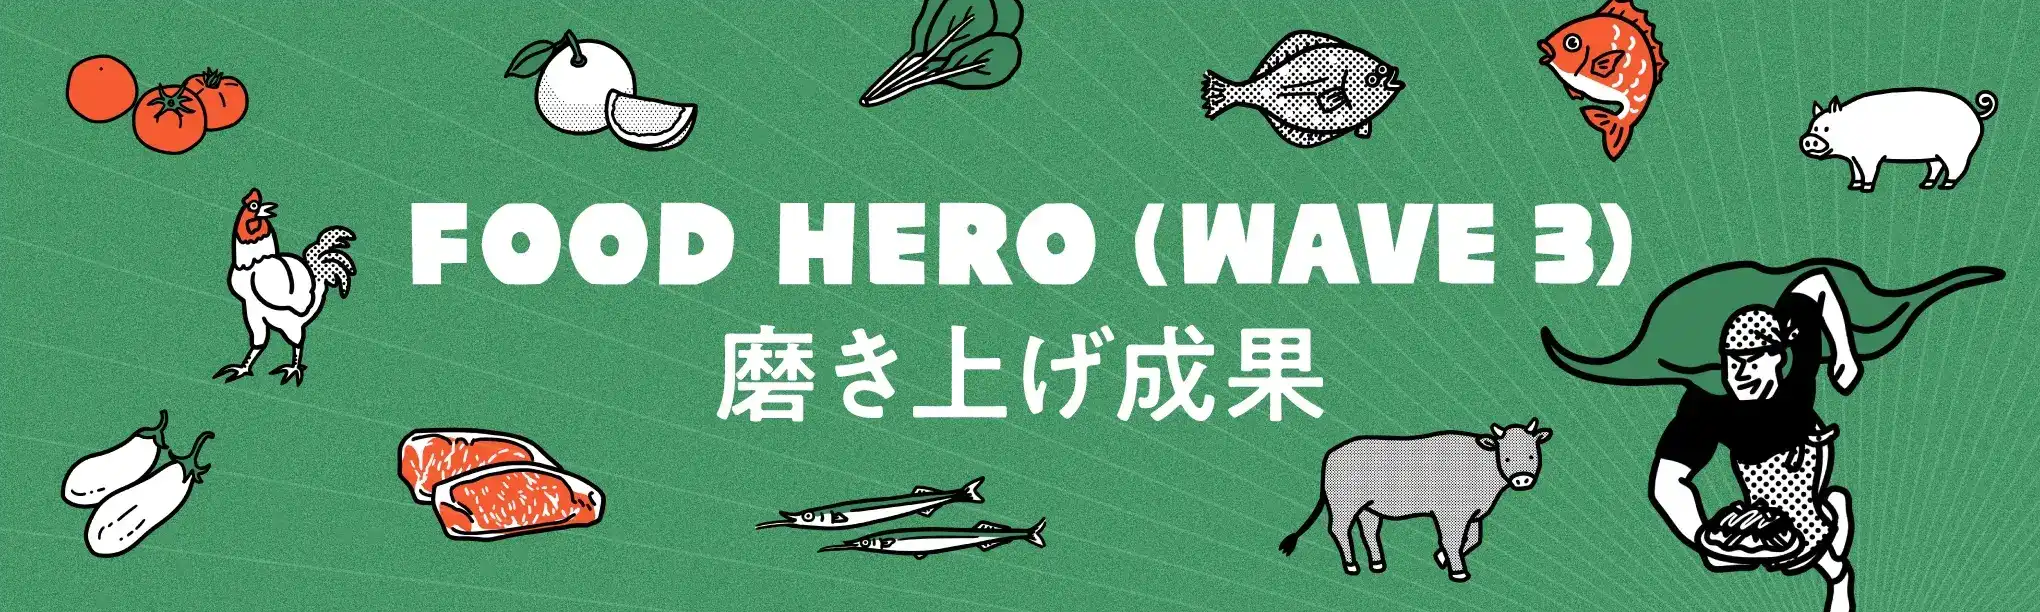 FOOD HERO(WAVE 3)磨き上げ成果